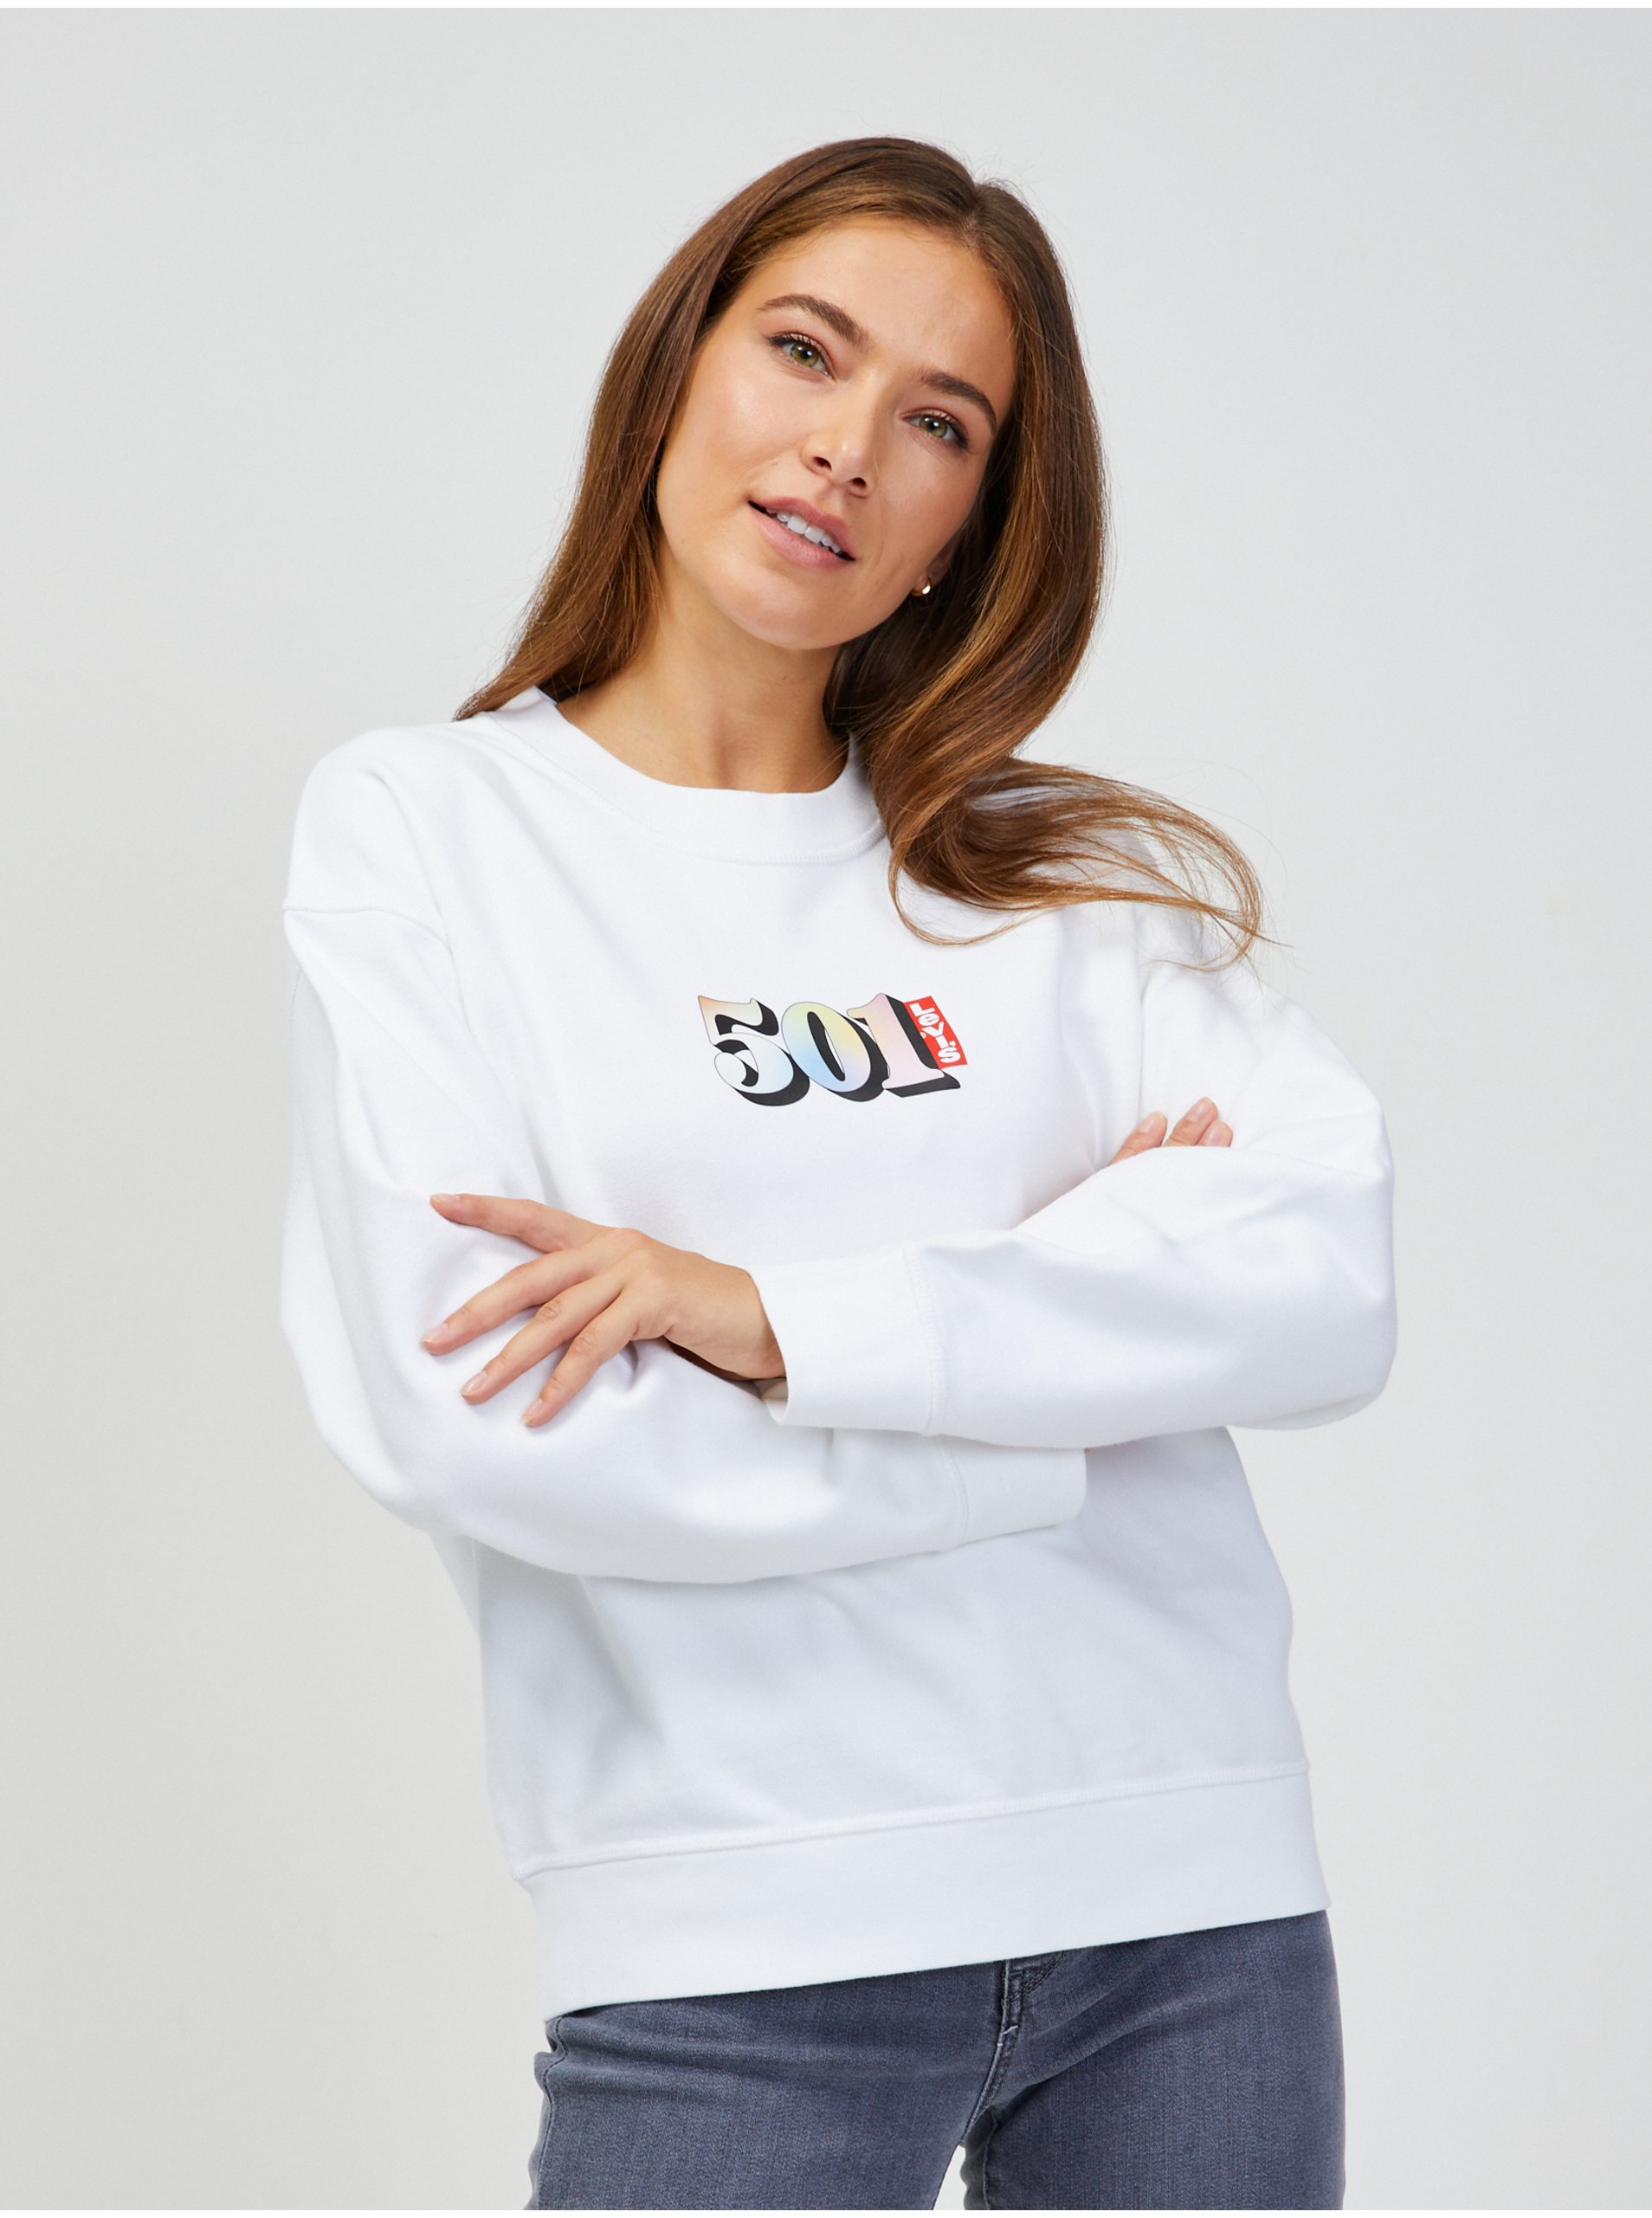 Levi's White Women's Sweatshirt Levi's® 501 - Women